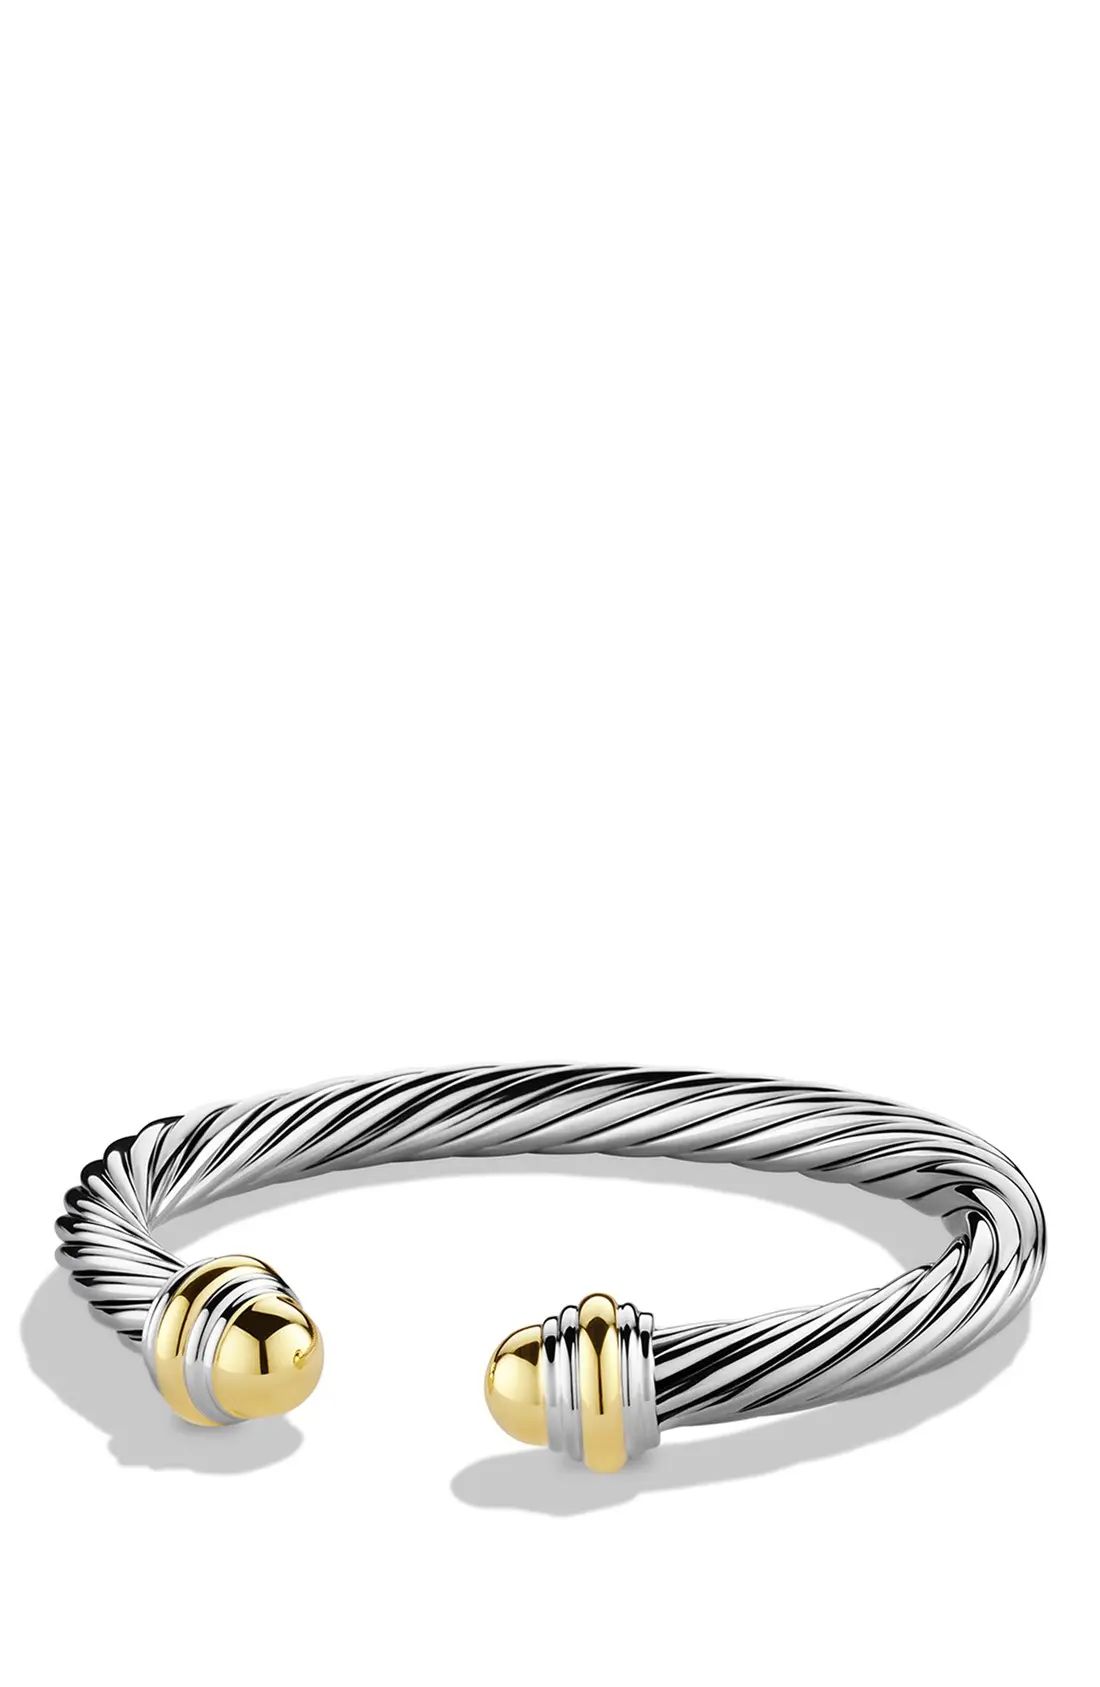 Women's David Yurman Cable Classics Bracelet With 14K Gold, 7mm | Nordstrom